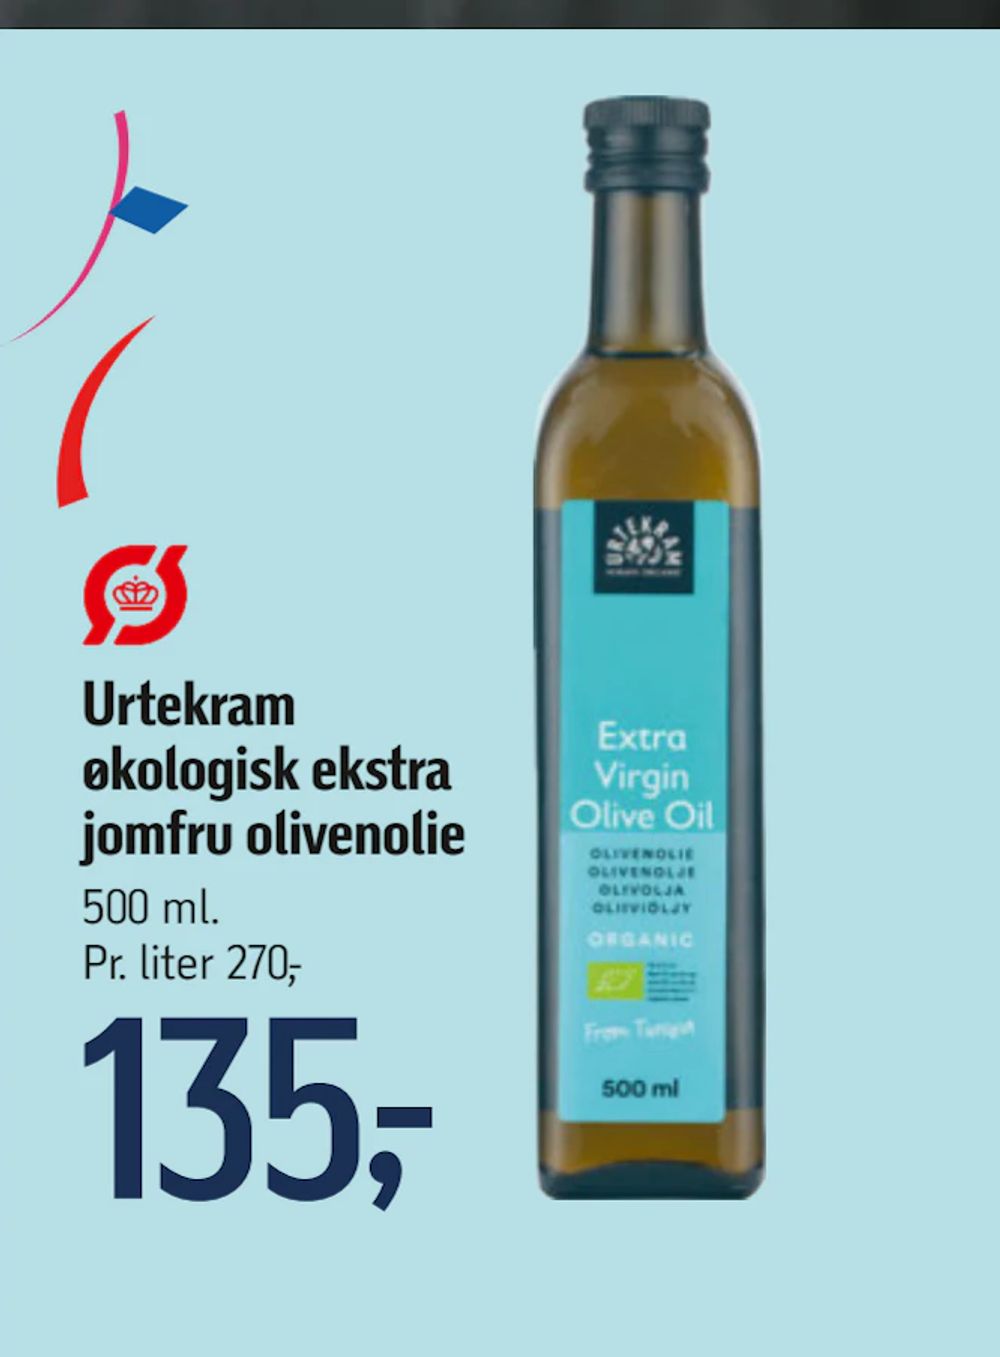 Tilbud på Urtekram økologisk ekstra jomfru olivenolie fra føtex til 135 kr.